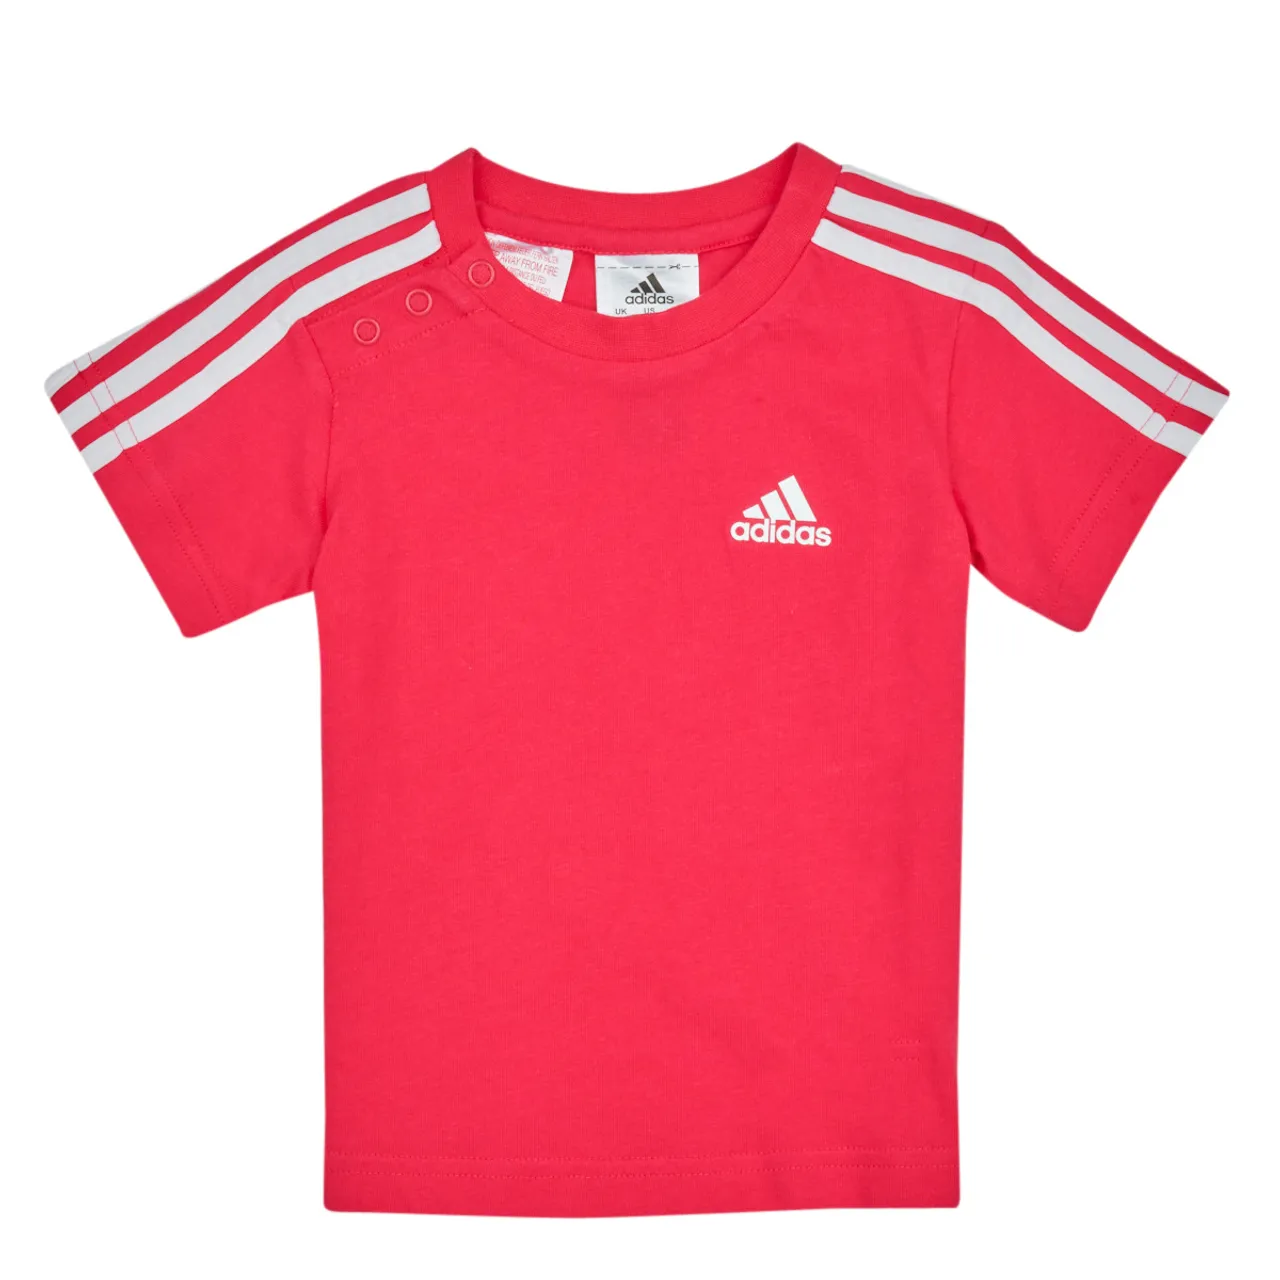 adidas  IB 3S TSHIRT  boys's Children's T shirt in Pink